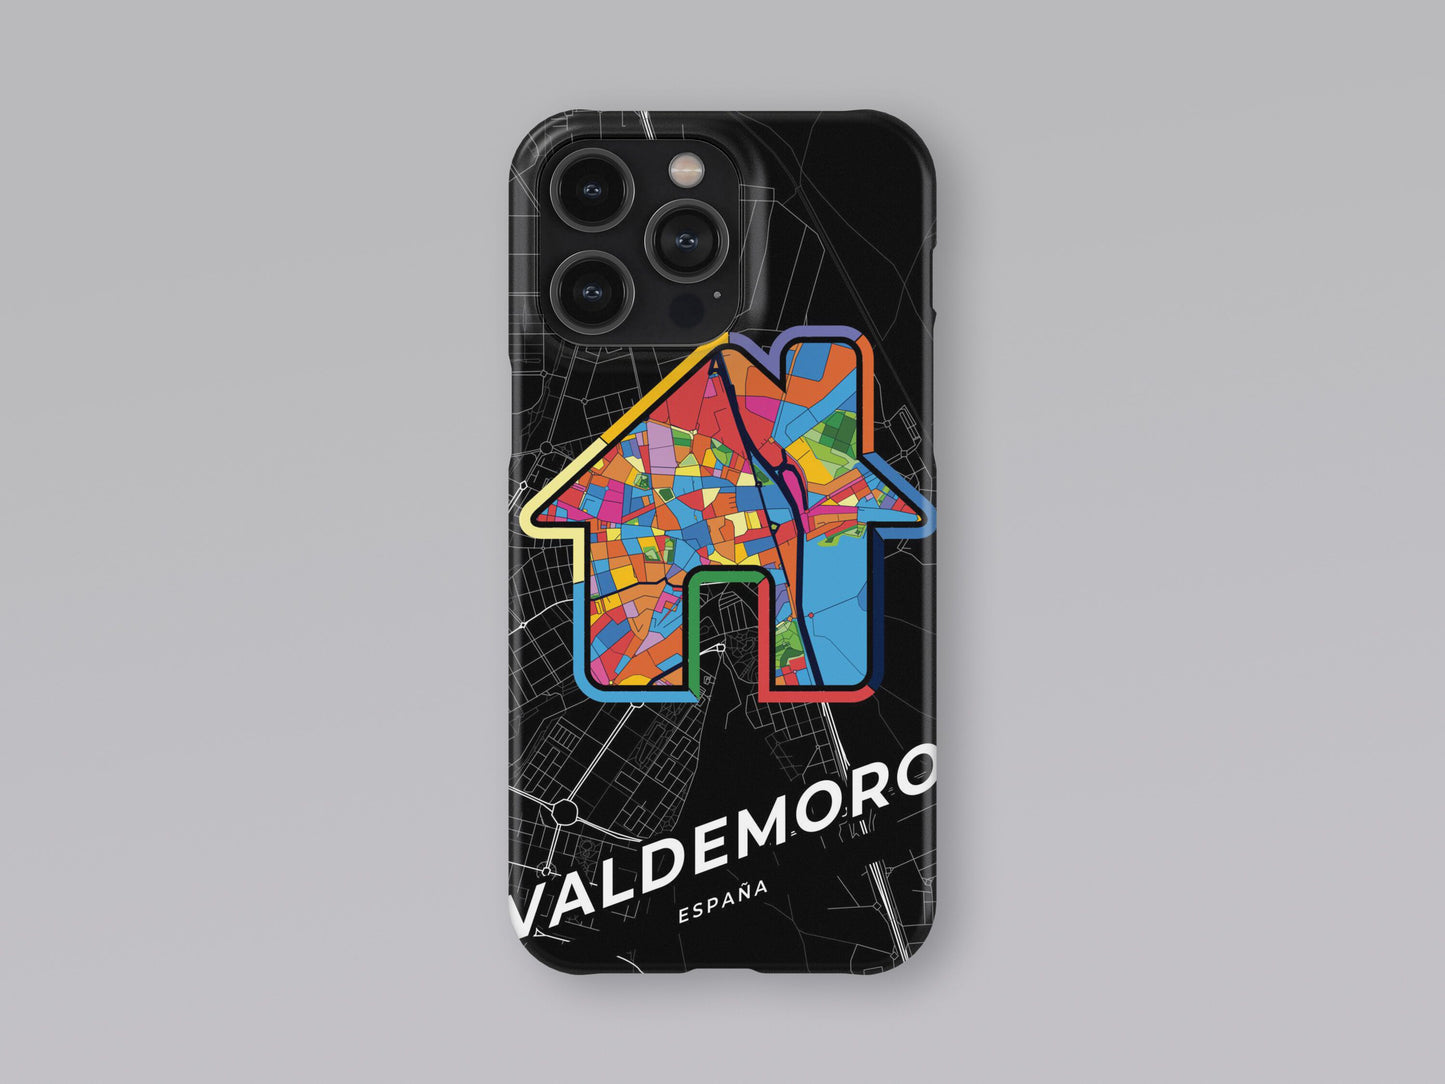 Valdemoro Spain slim phone case with colorful icon 3